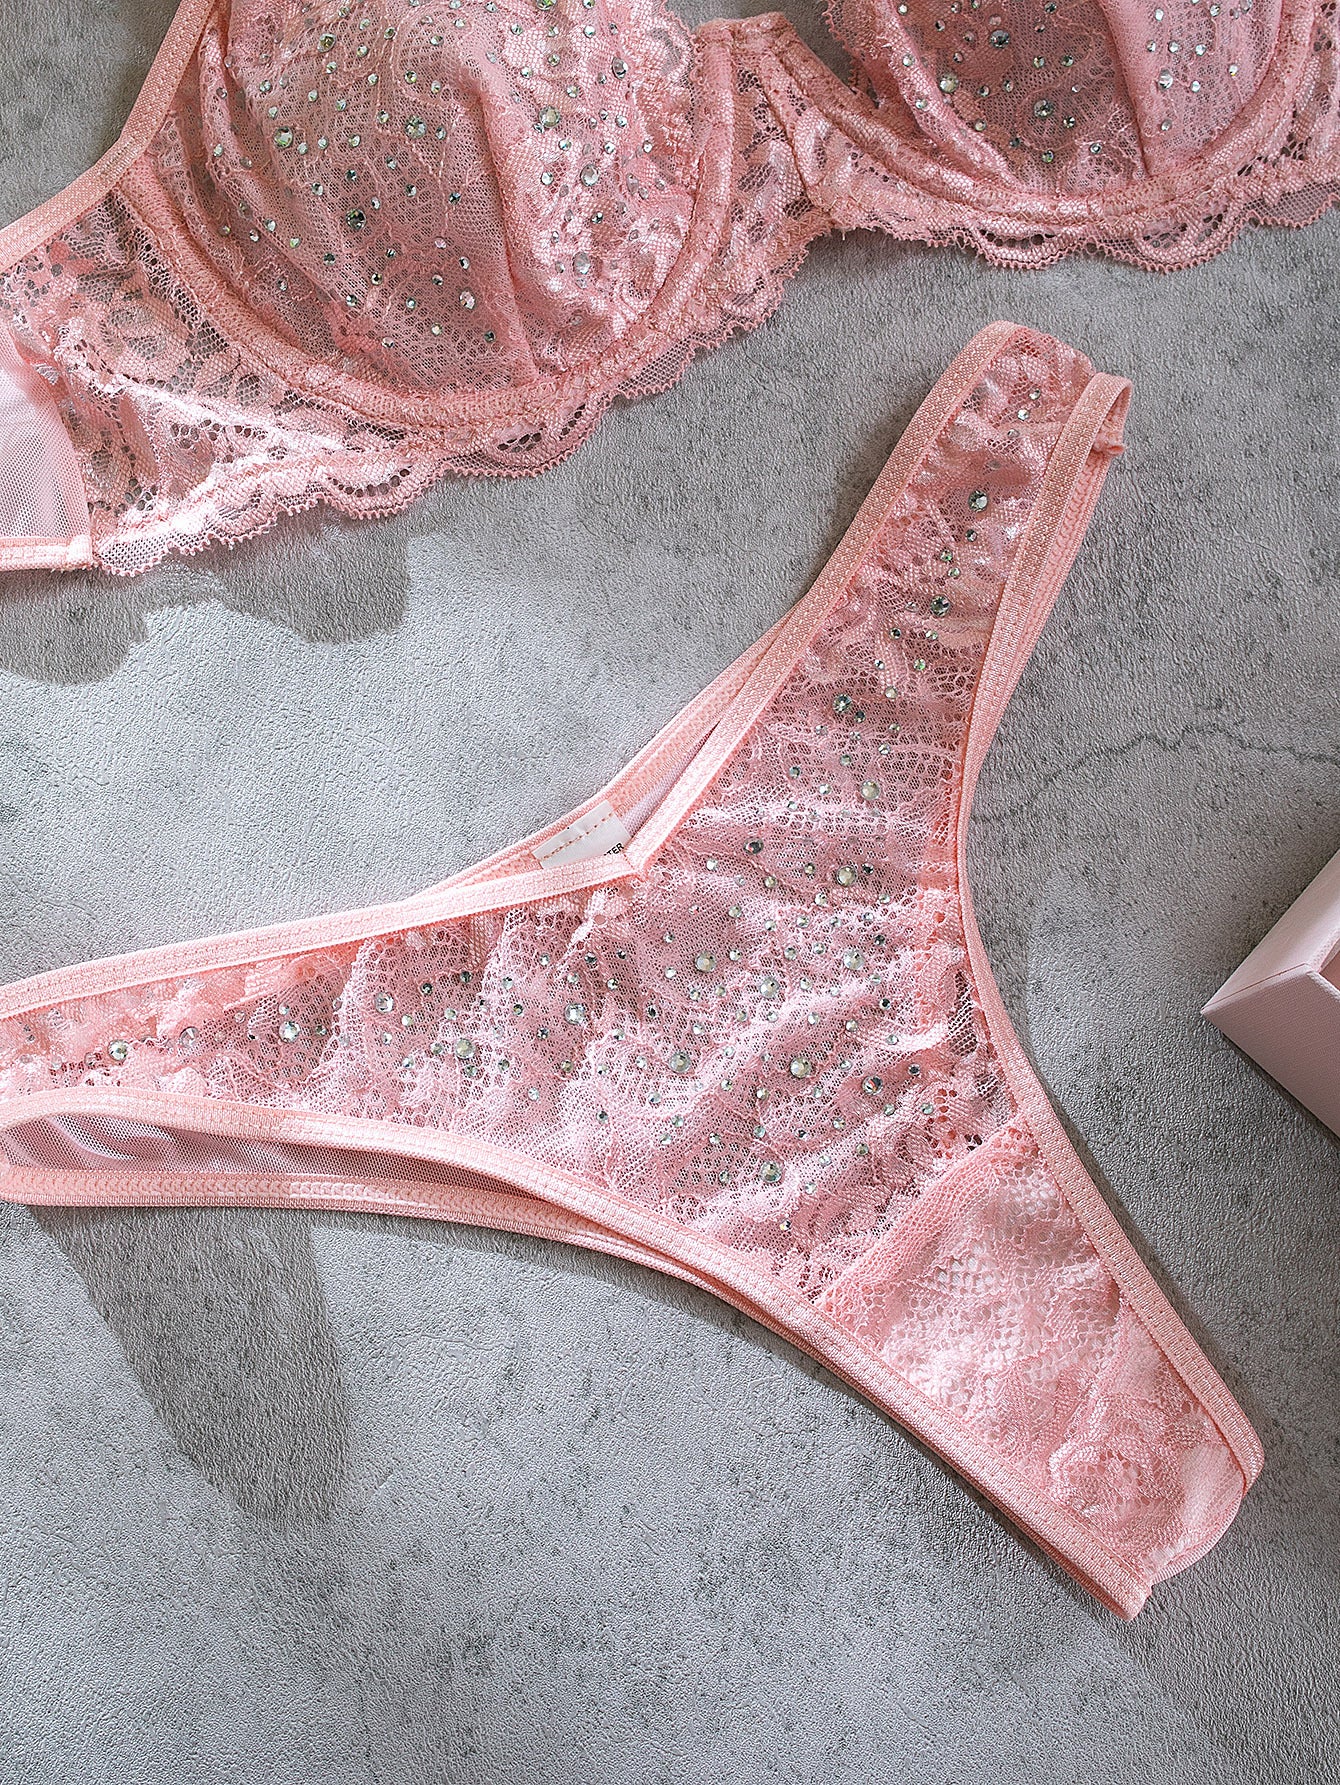 Rosy Radiance Rhinestone-Accented Lingerie Set mooods lingerie